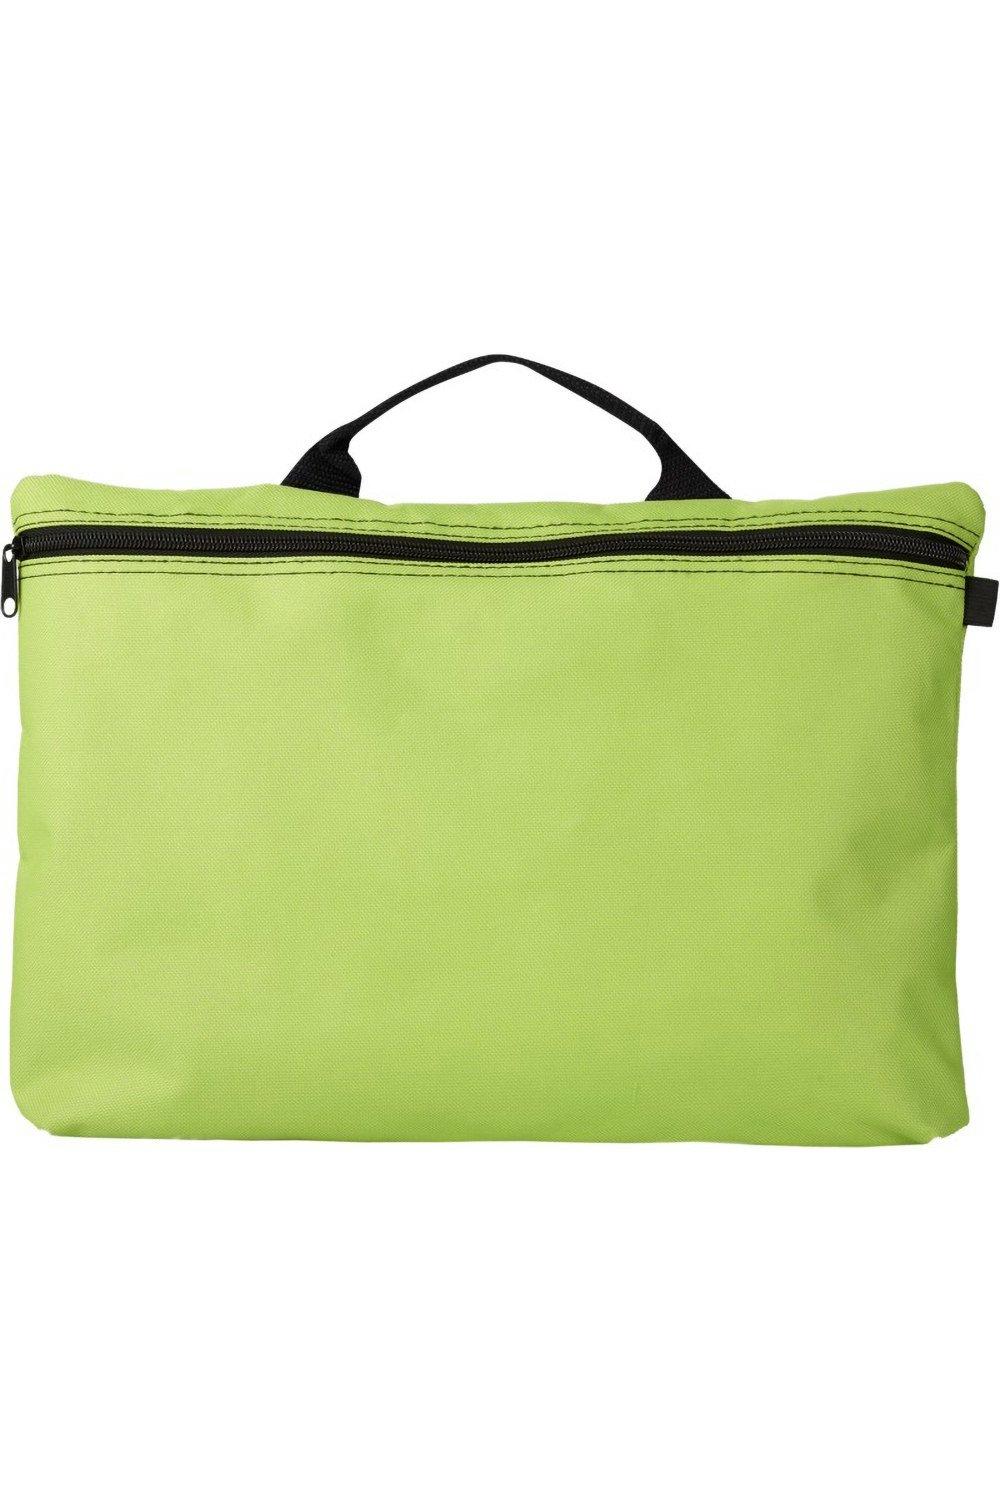 Конференц-сумка Орландо Bullet, зеленый